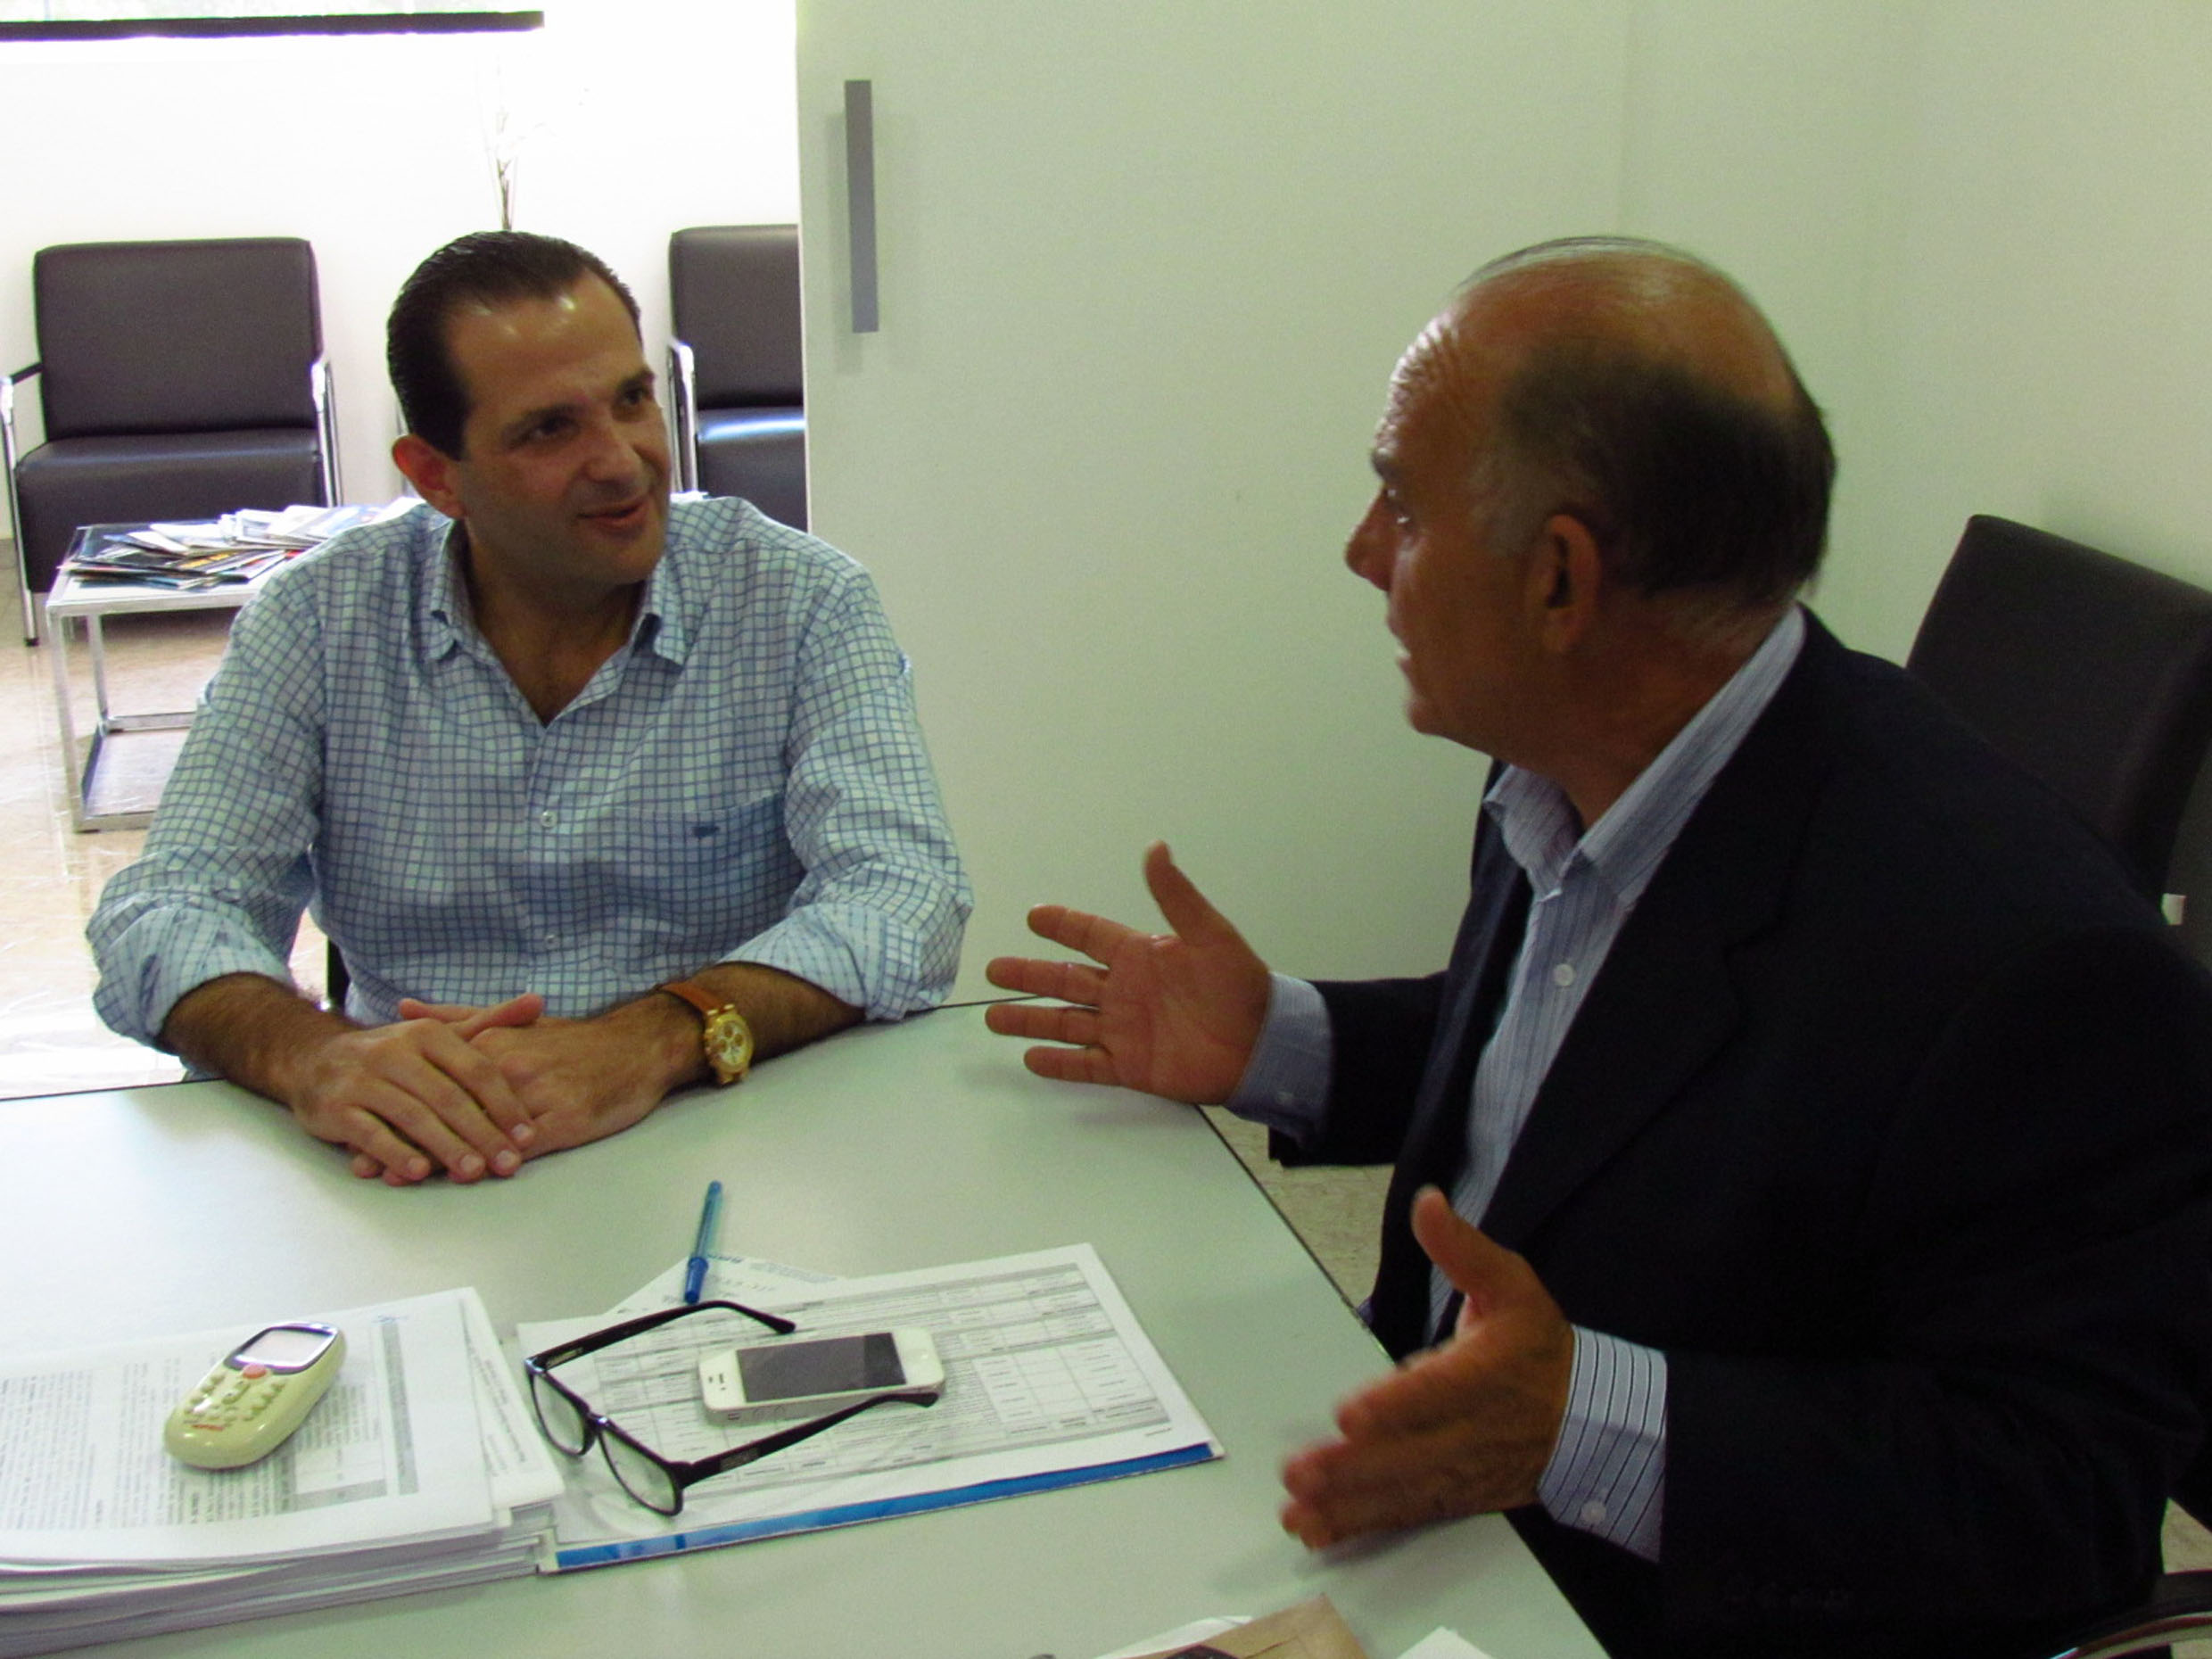    Edmir Chedid e o prefeito Vicente Zacan.<a style='float:right;color:#ccc' href='https://www3.al.sp.gov.br/repositorio/noticia/N-11-2013/fg132771.jpg' target=_blank><i class='bi bi-zoom-in'></i> Clique para ver a imagem </a>